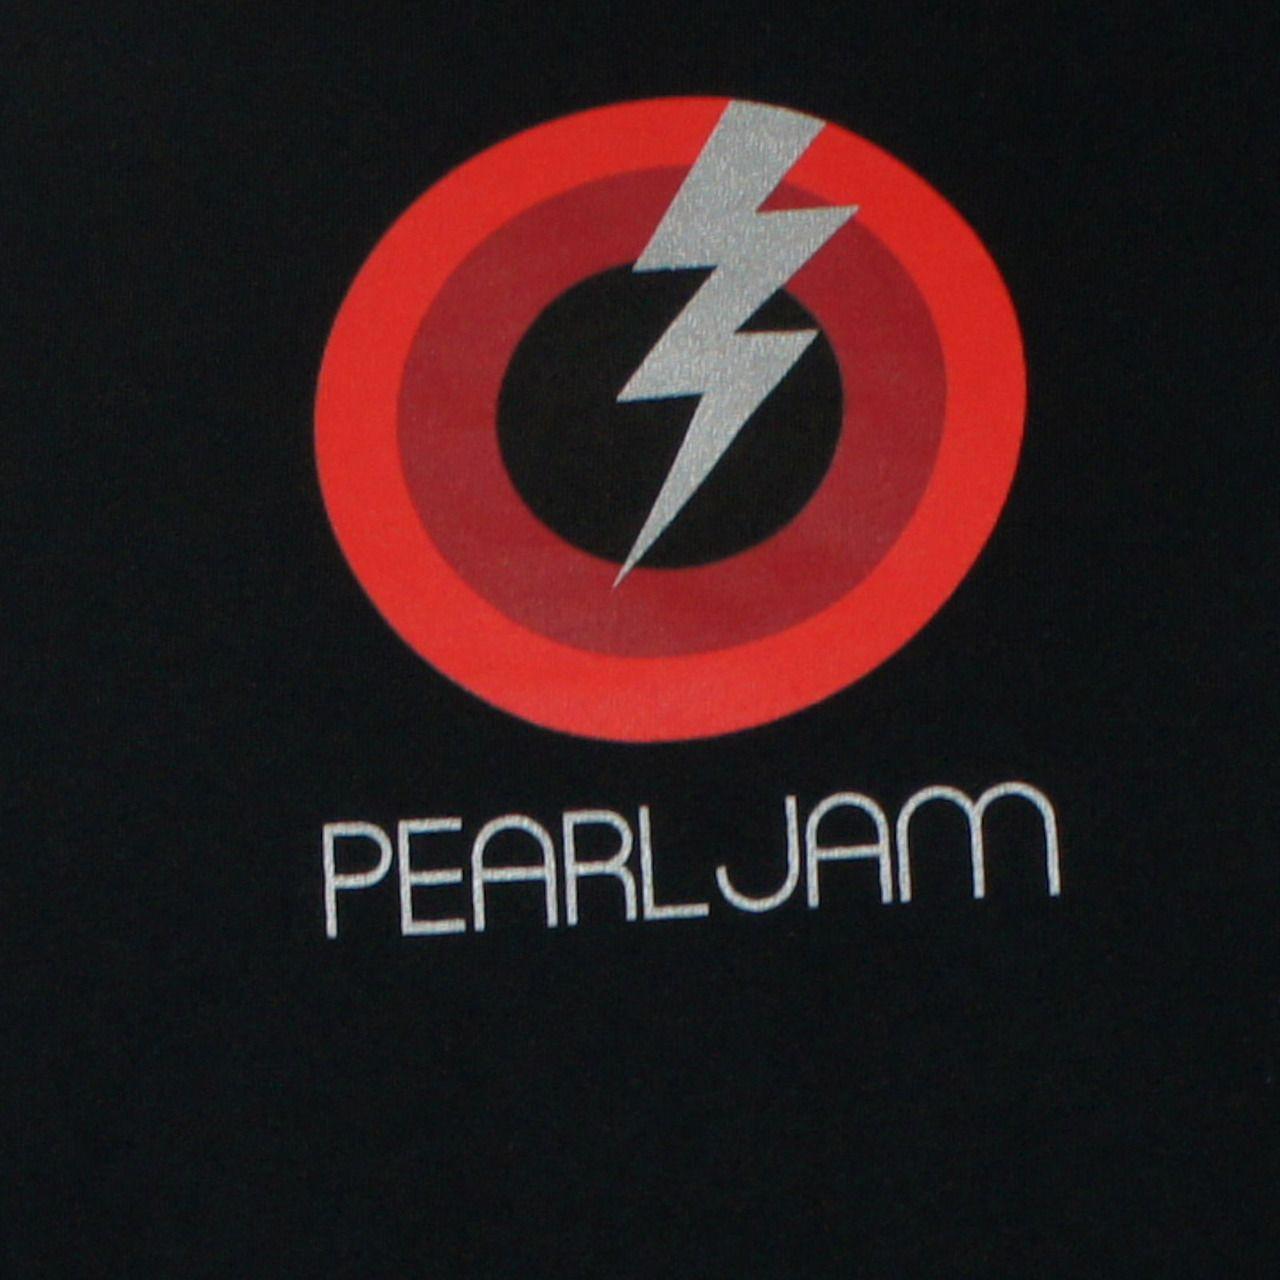 Pearl Jam Logo - PEARL JAM Bullseye Lightning Bolt Logo Rock T-SHIRT - Merch2rock ...